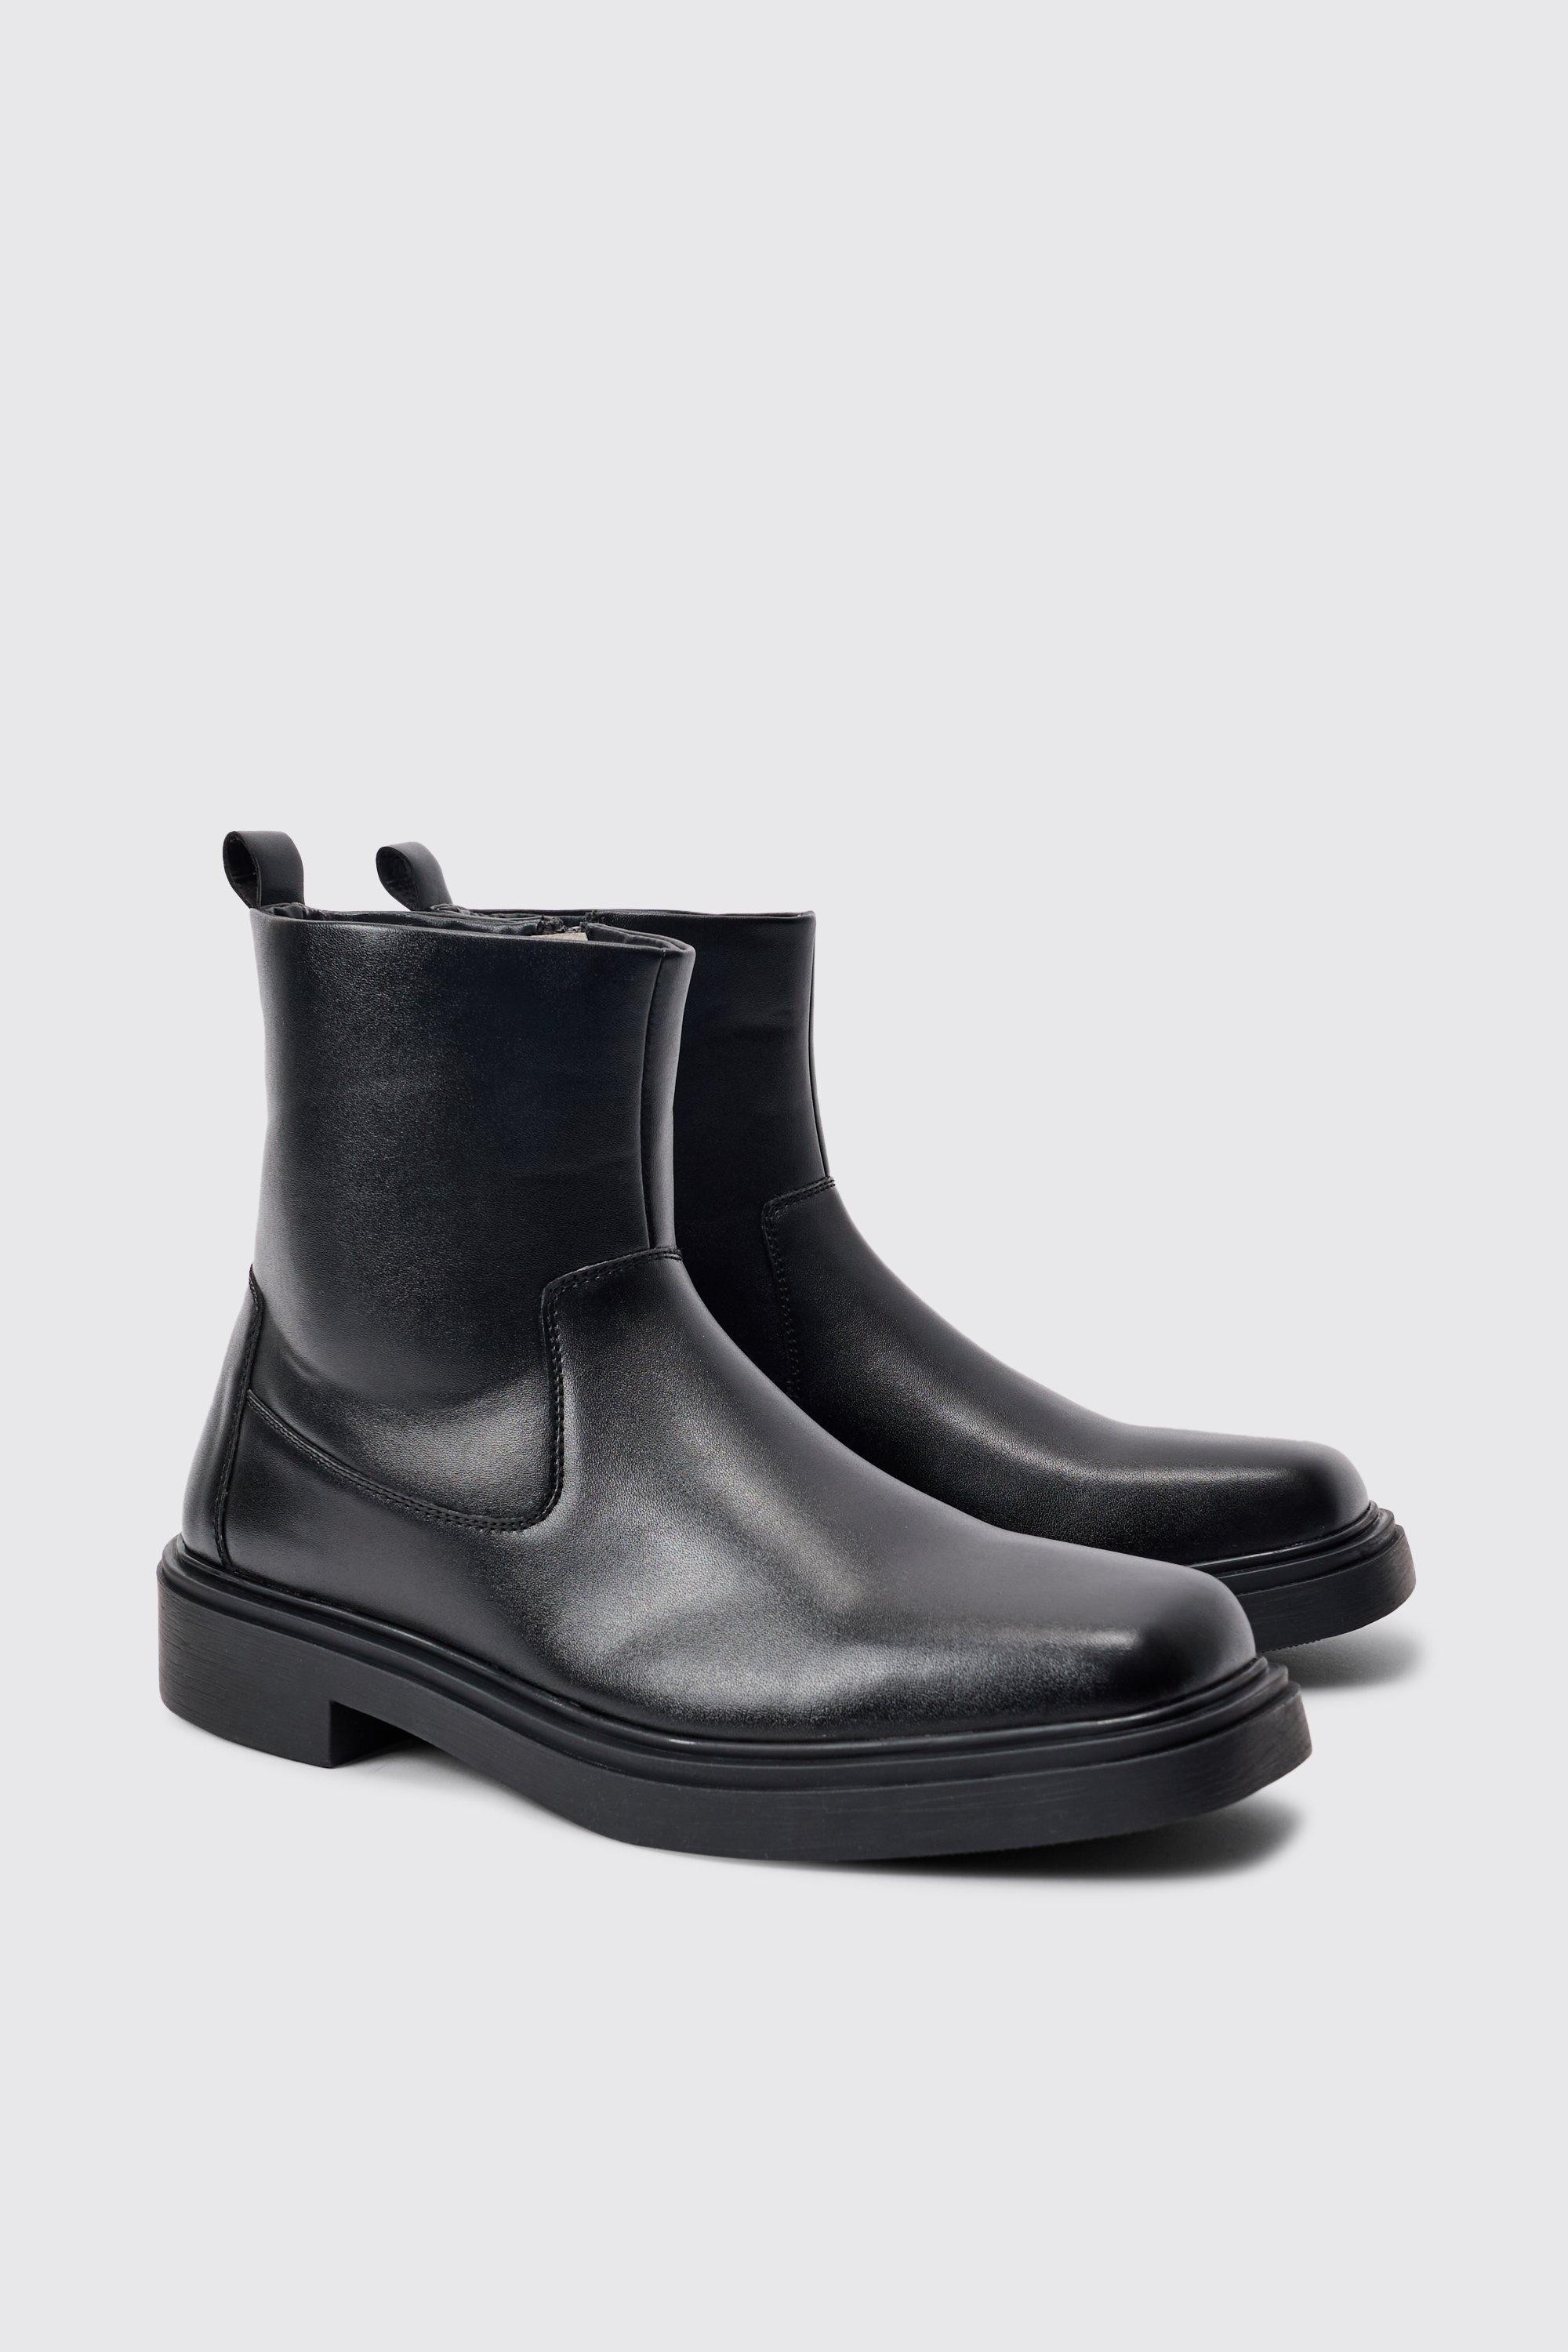 Image of Pu Square Toe Zip Up Boot In Black, Nero